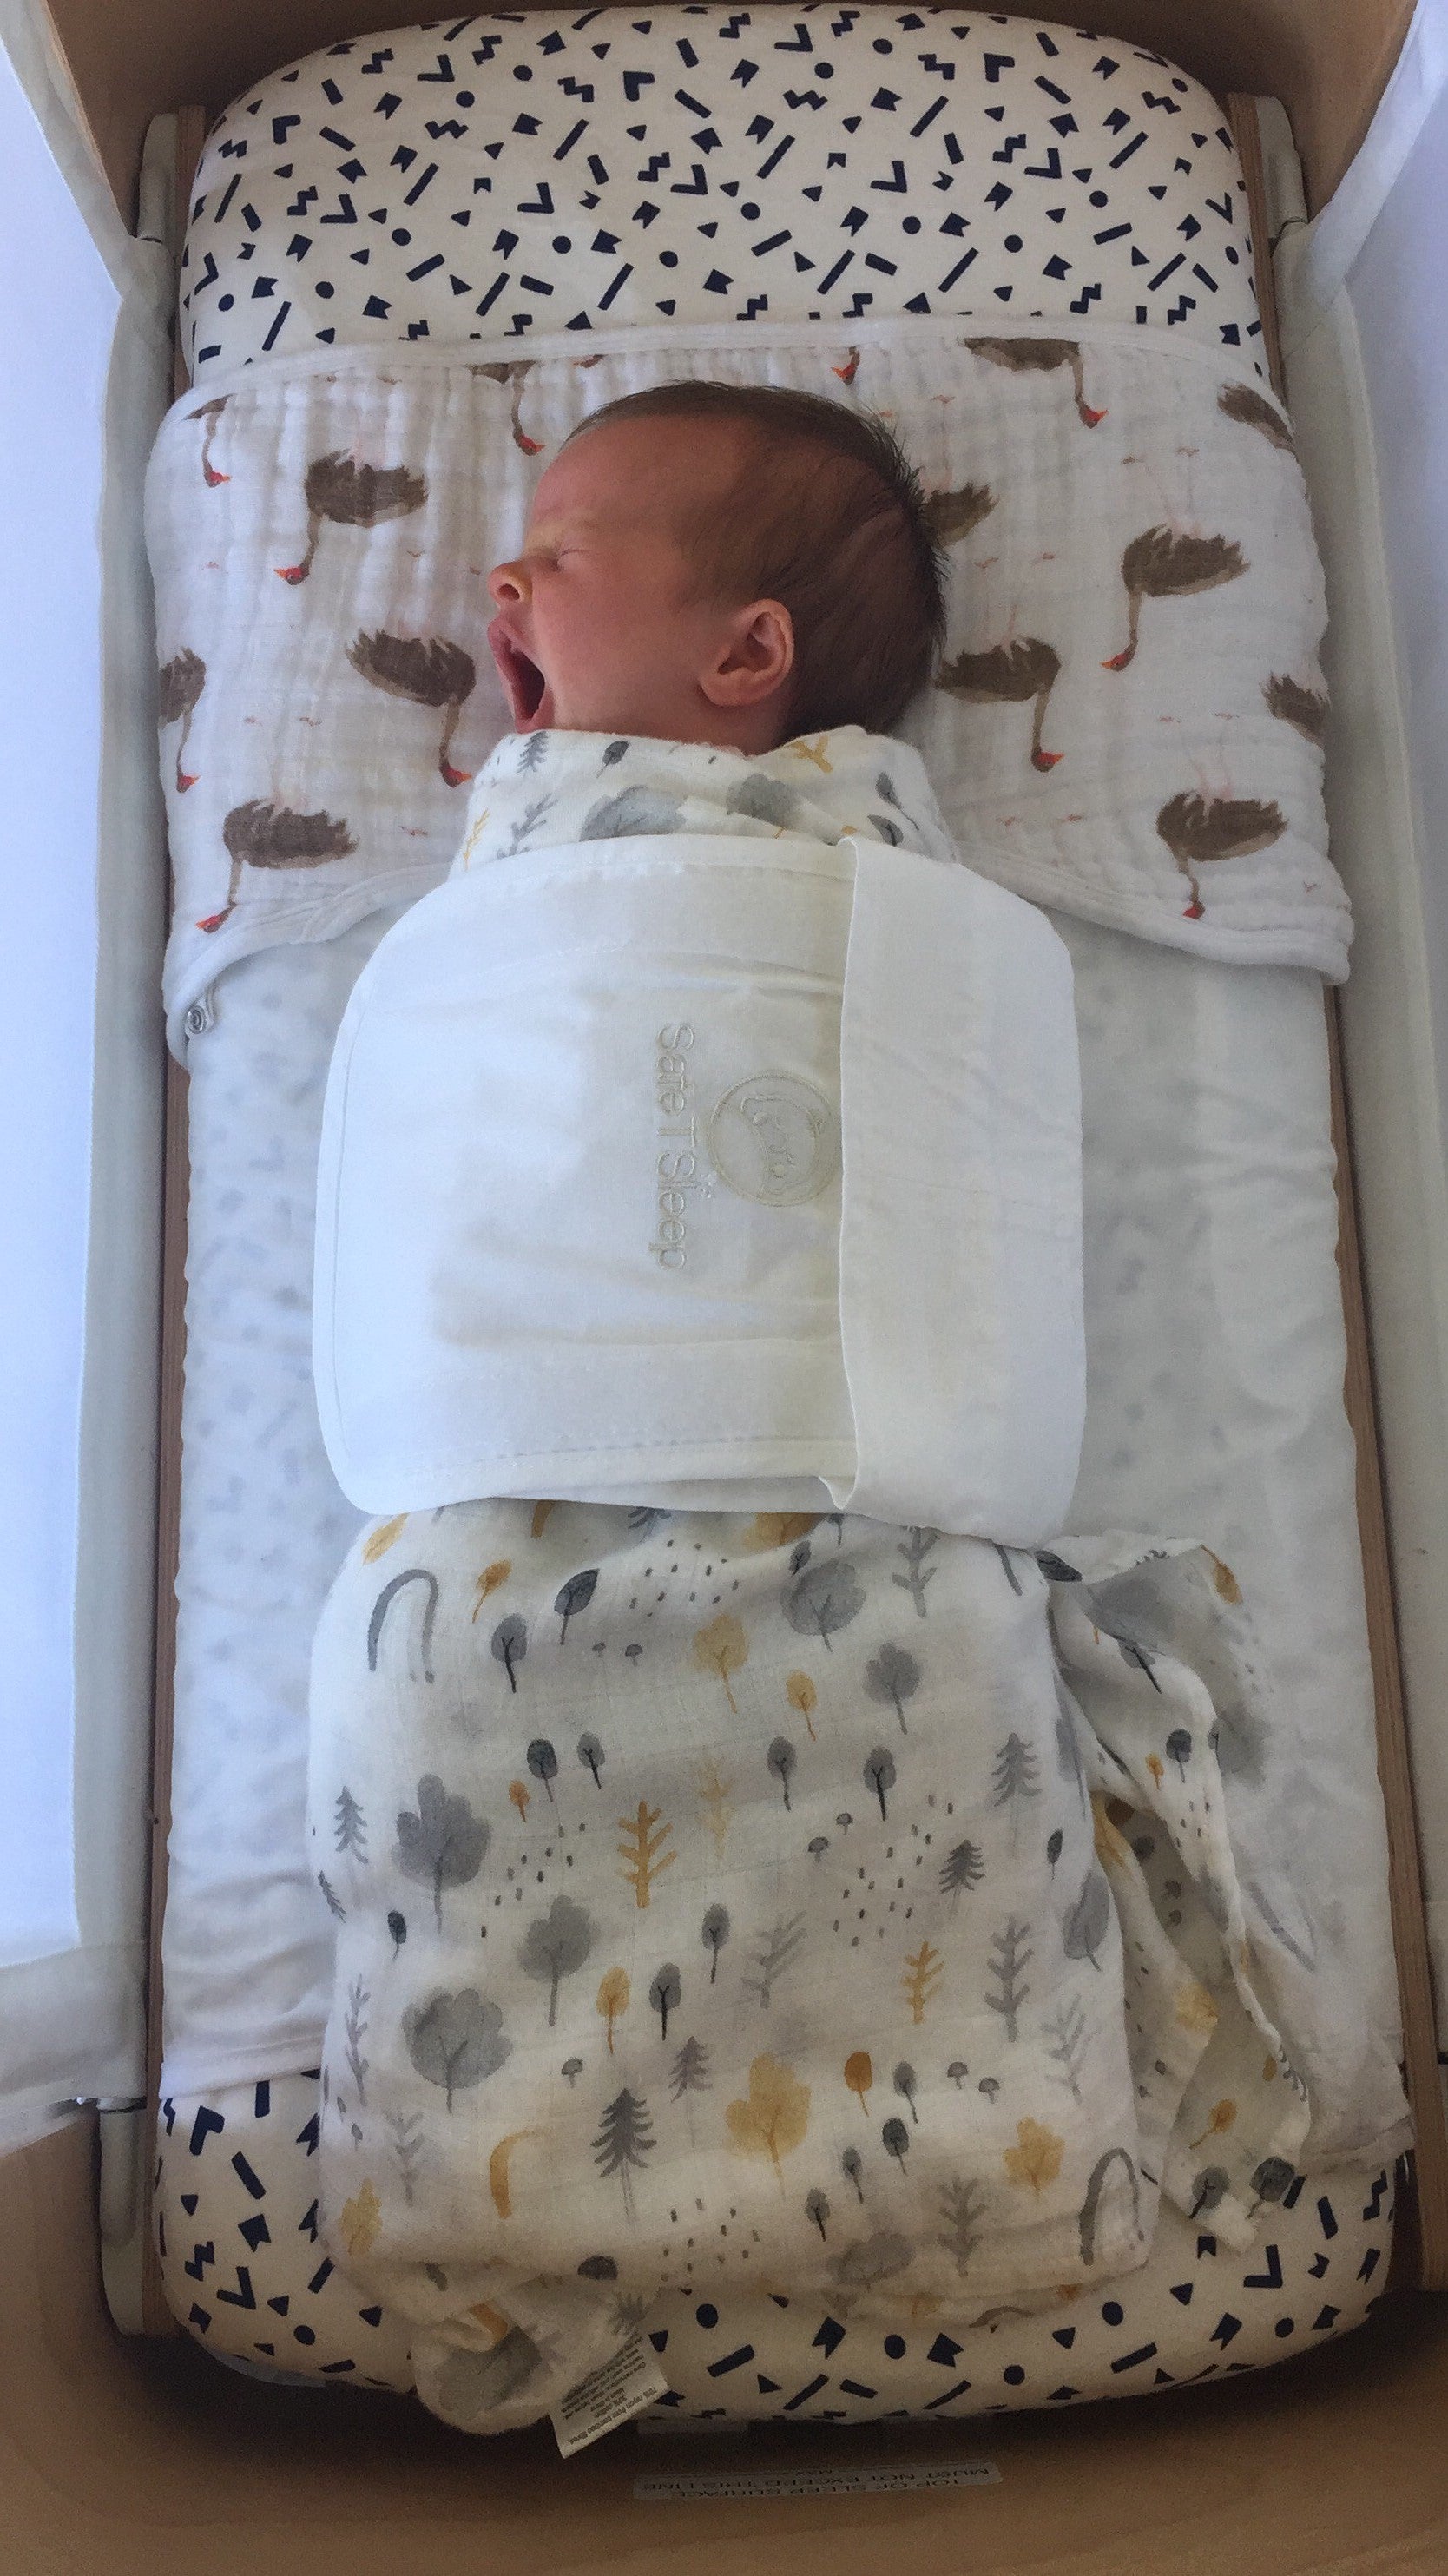 Sleepwrap baby wrap swaddle in a bassinet/cosleeper with a newborn